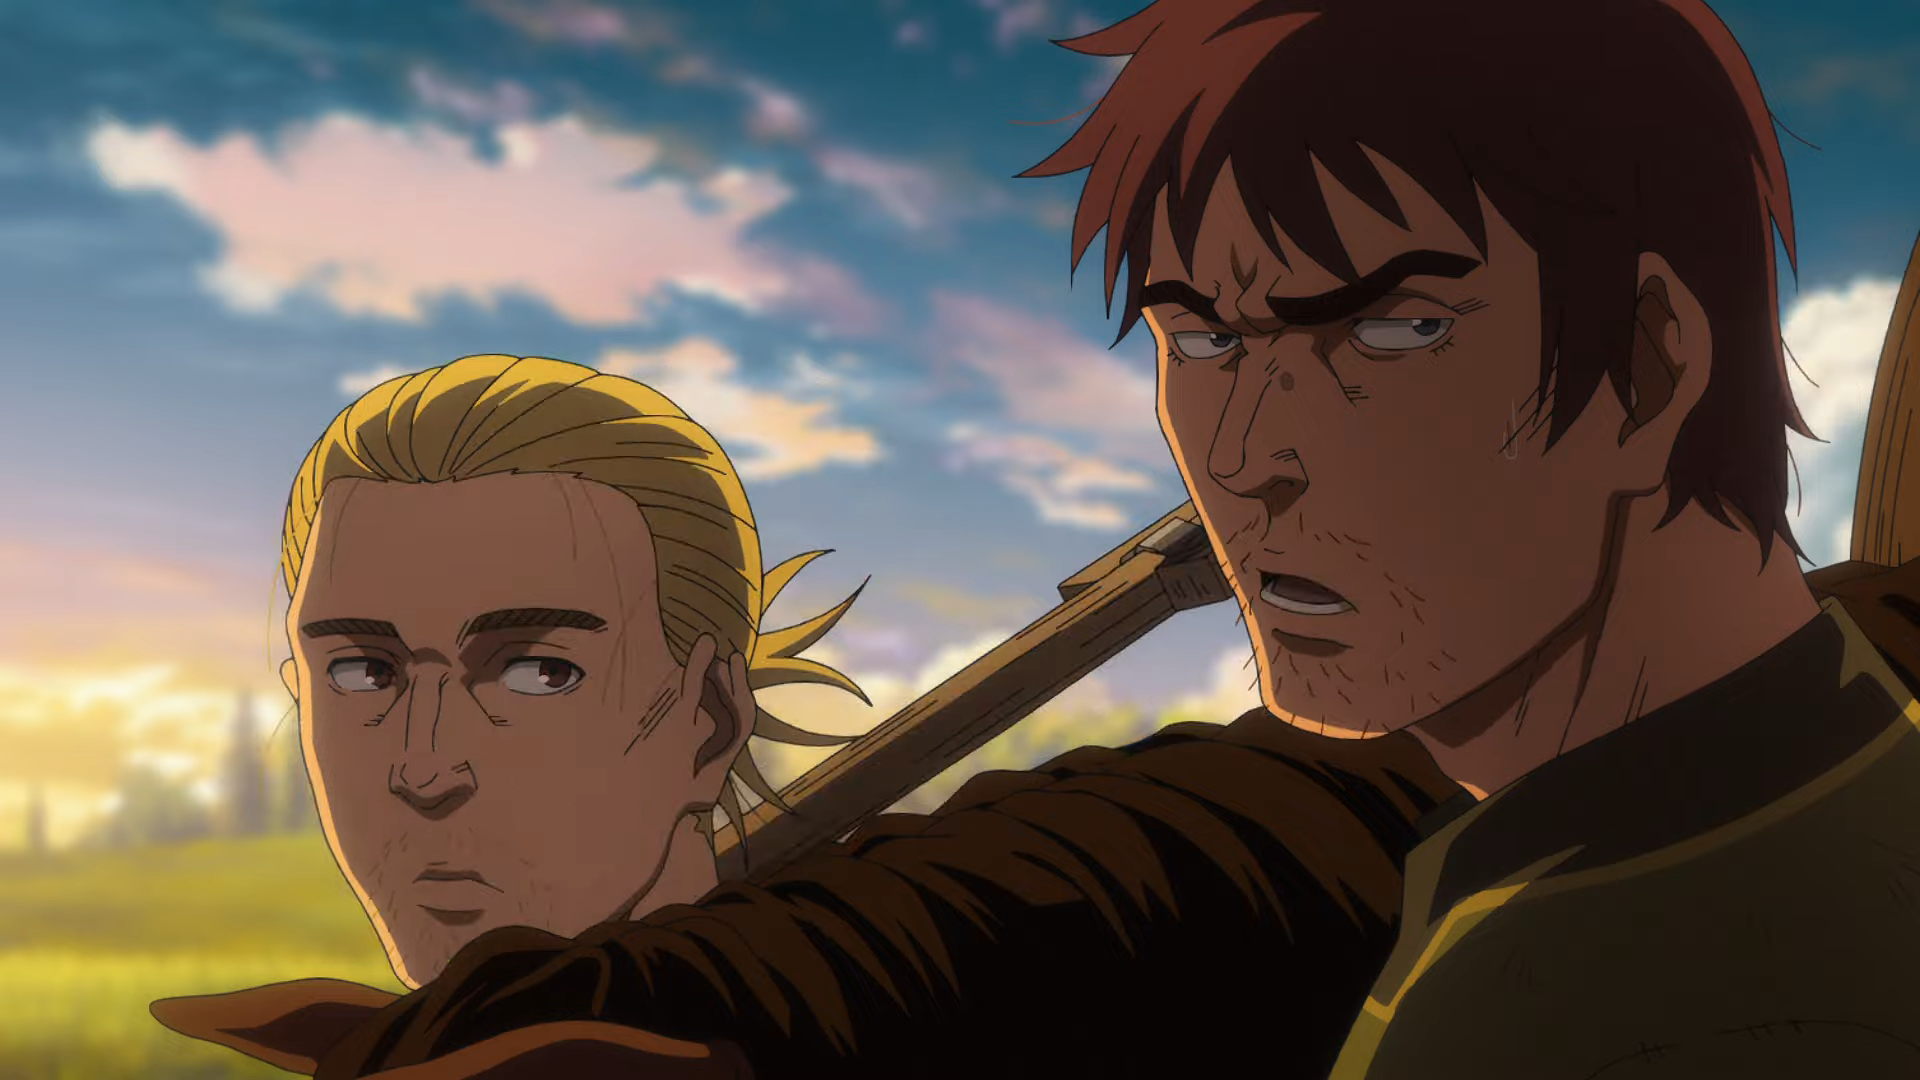 Vinland Saga Season 2 Gets Episode 6 Preview - Anime Corner